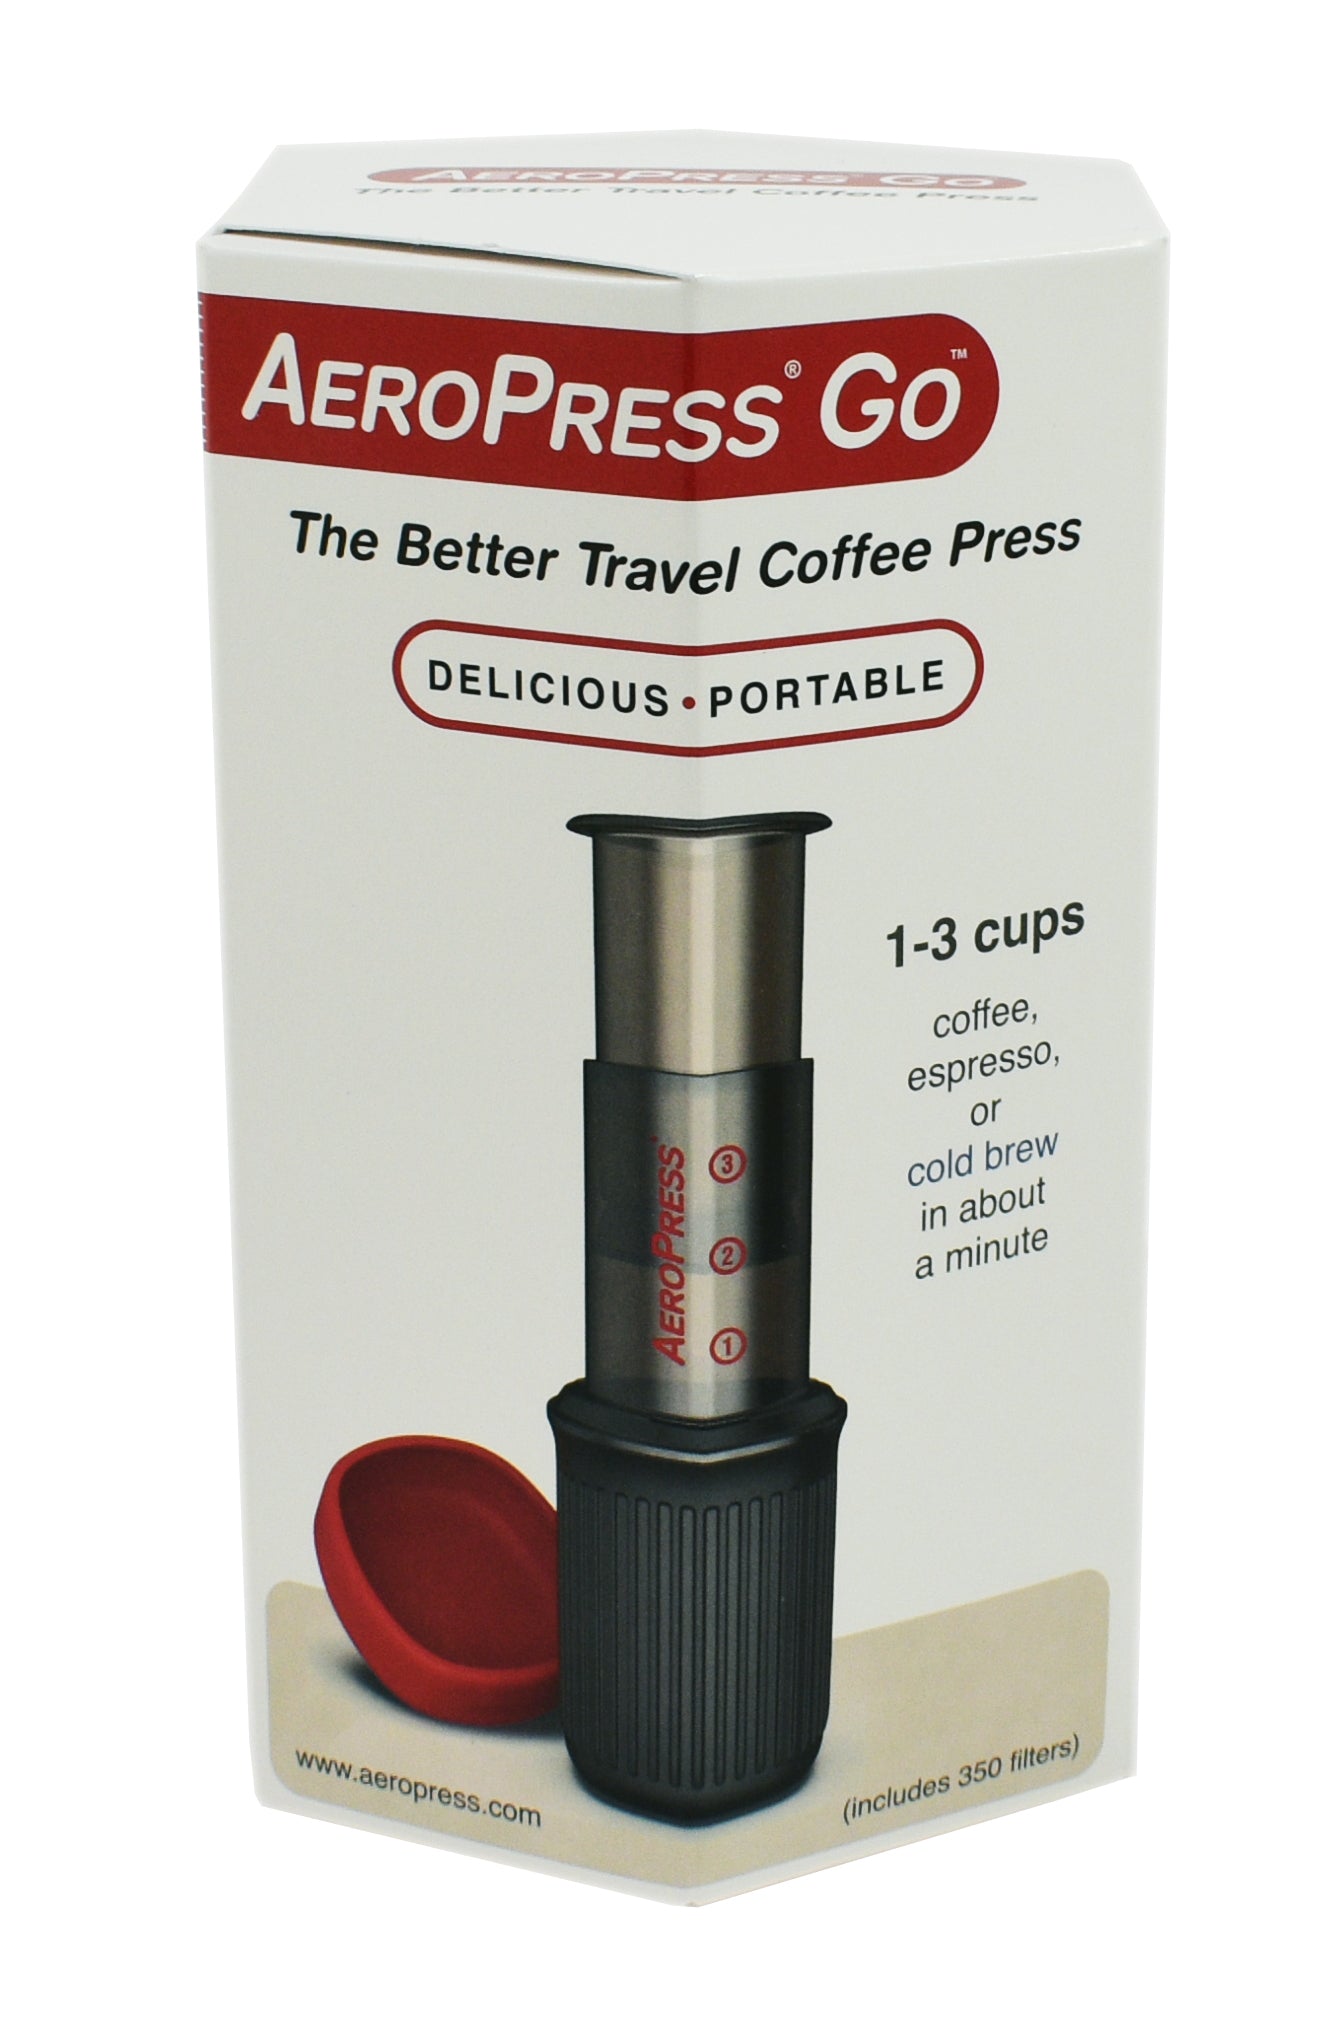 AEROPRESS GO TRAVEL COFFEE PRESS